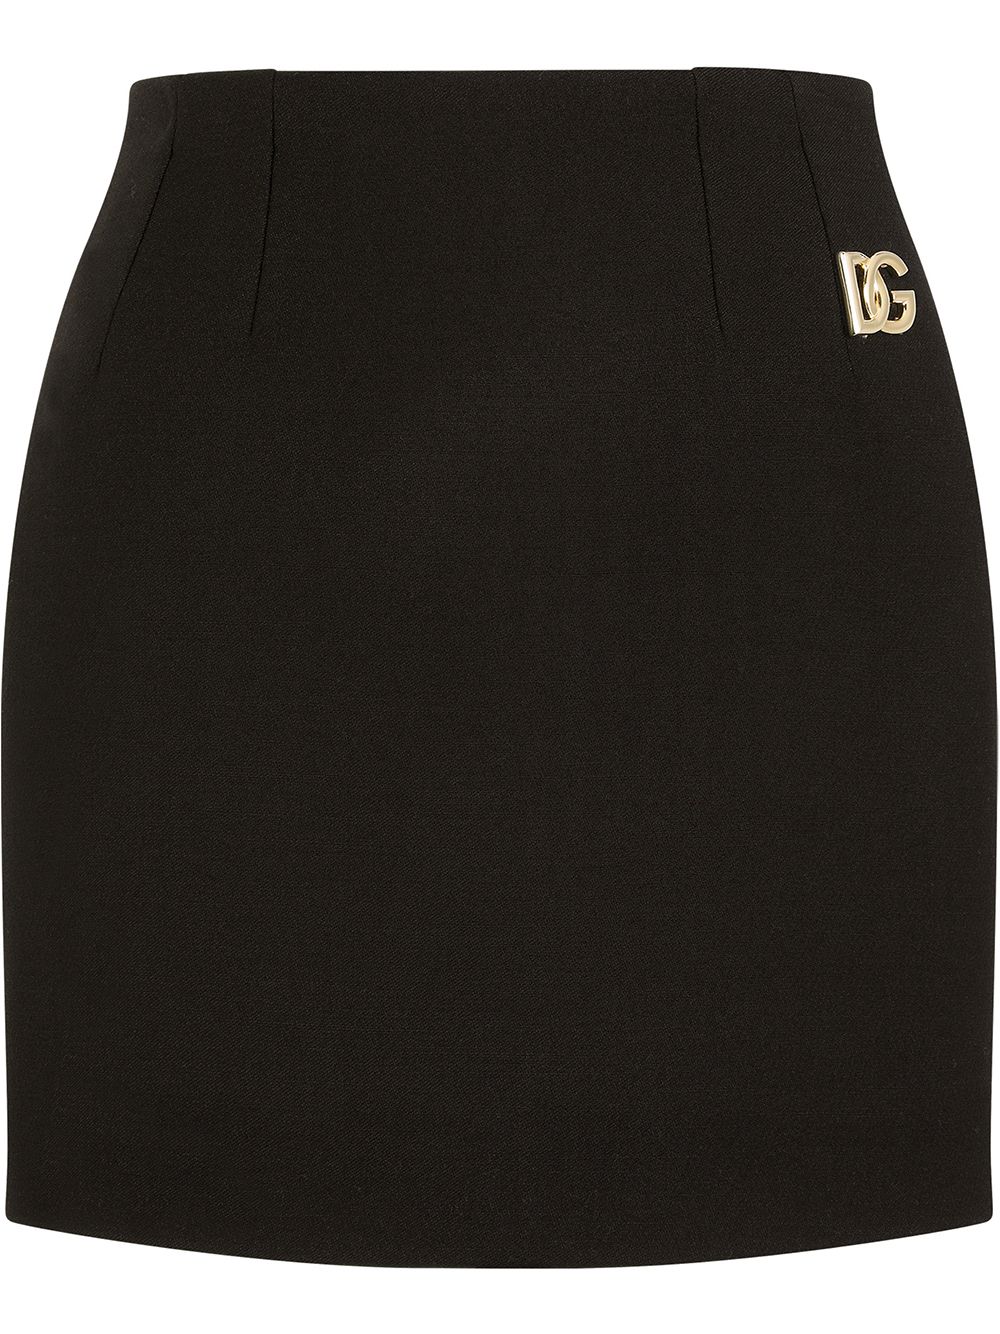 фото Dolce & gabbana короткая юбка-карандаш с логотипом